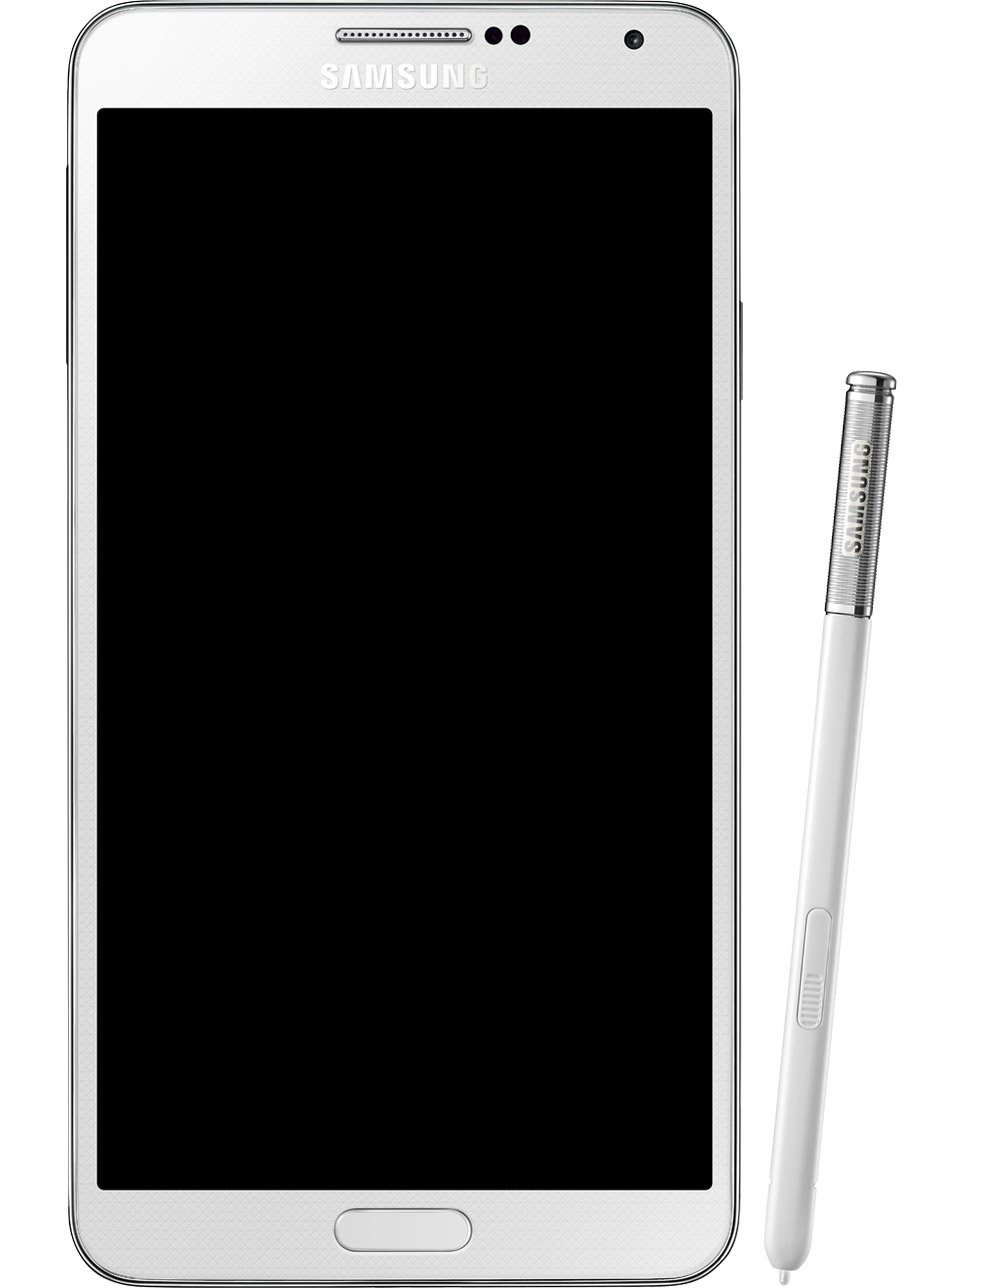 Samsung Galaxy Note 3 N9005 32GB 4G LTE WHITE Unlo